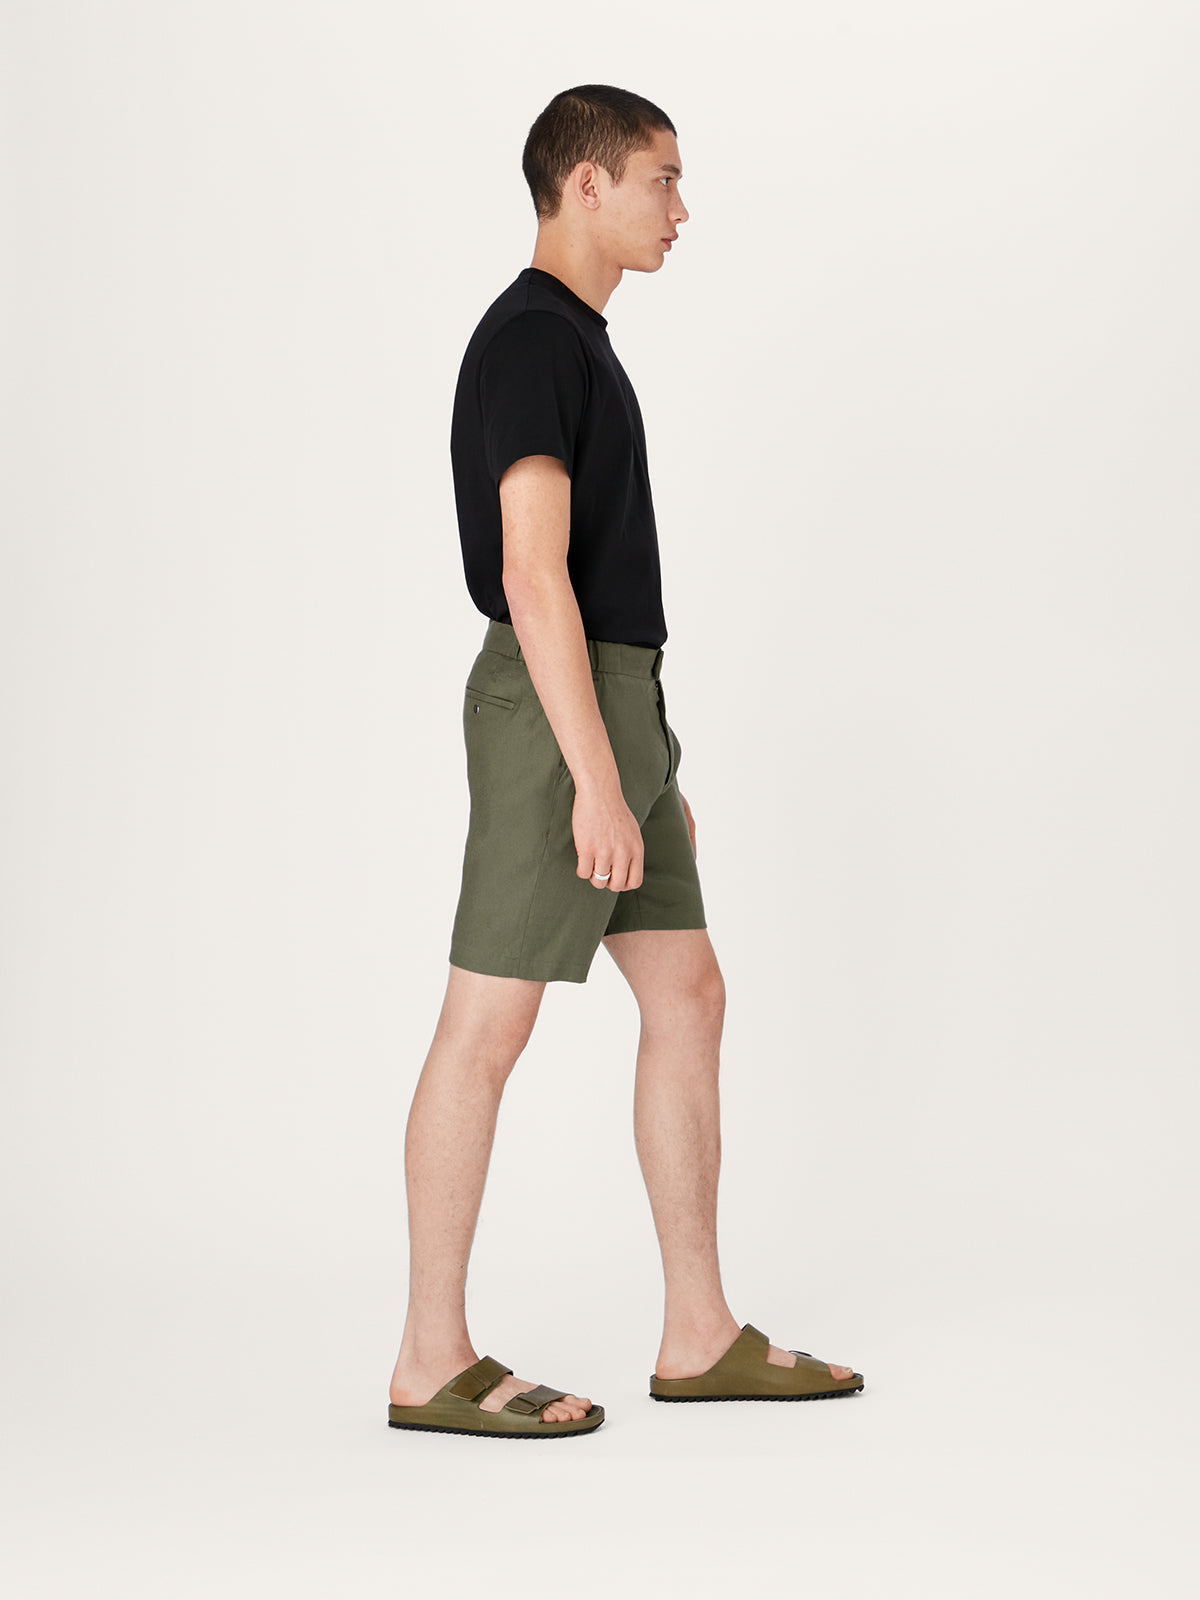 The 12 Shorts Linen 9" || Olive | Linen